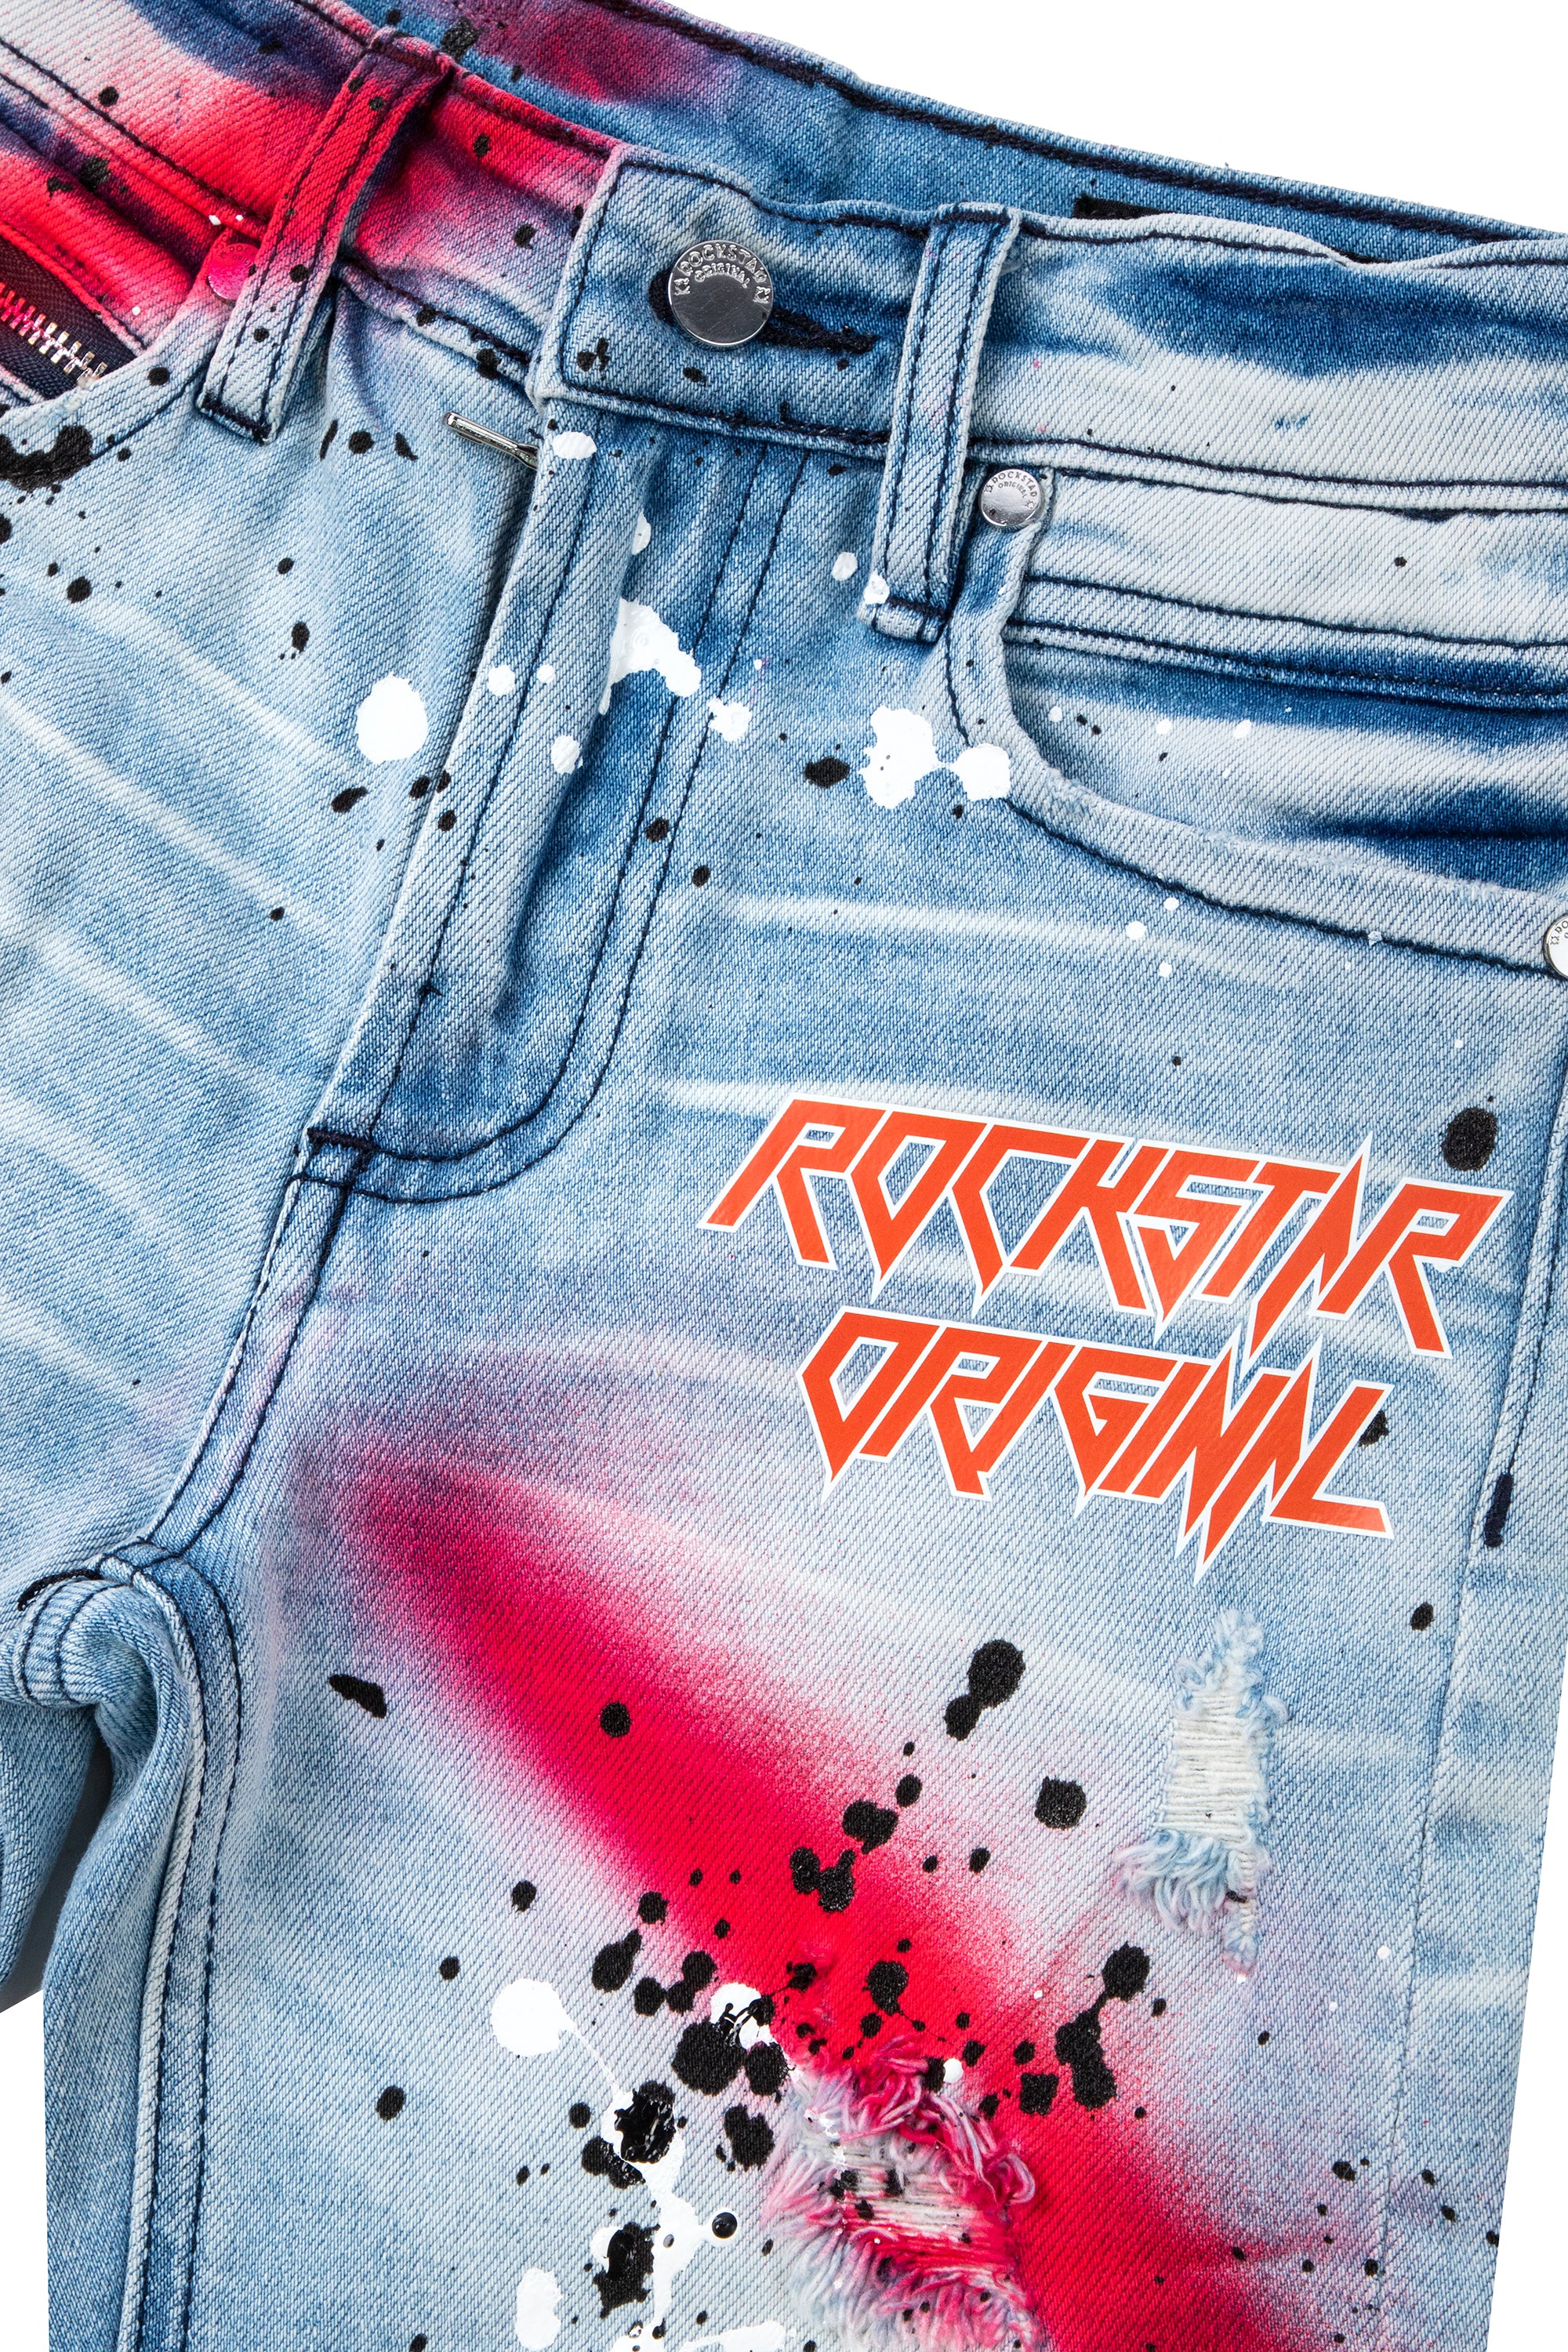 All-Star ⭐️ Design Leather Denim Stage Pants Rockstar Rock and